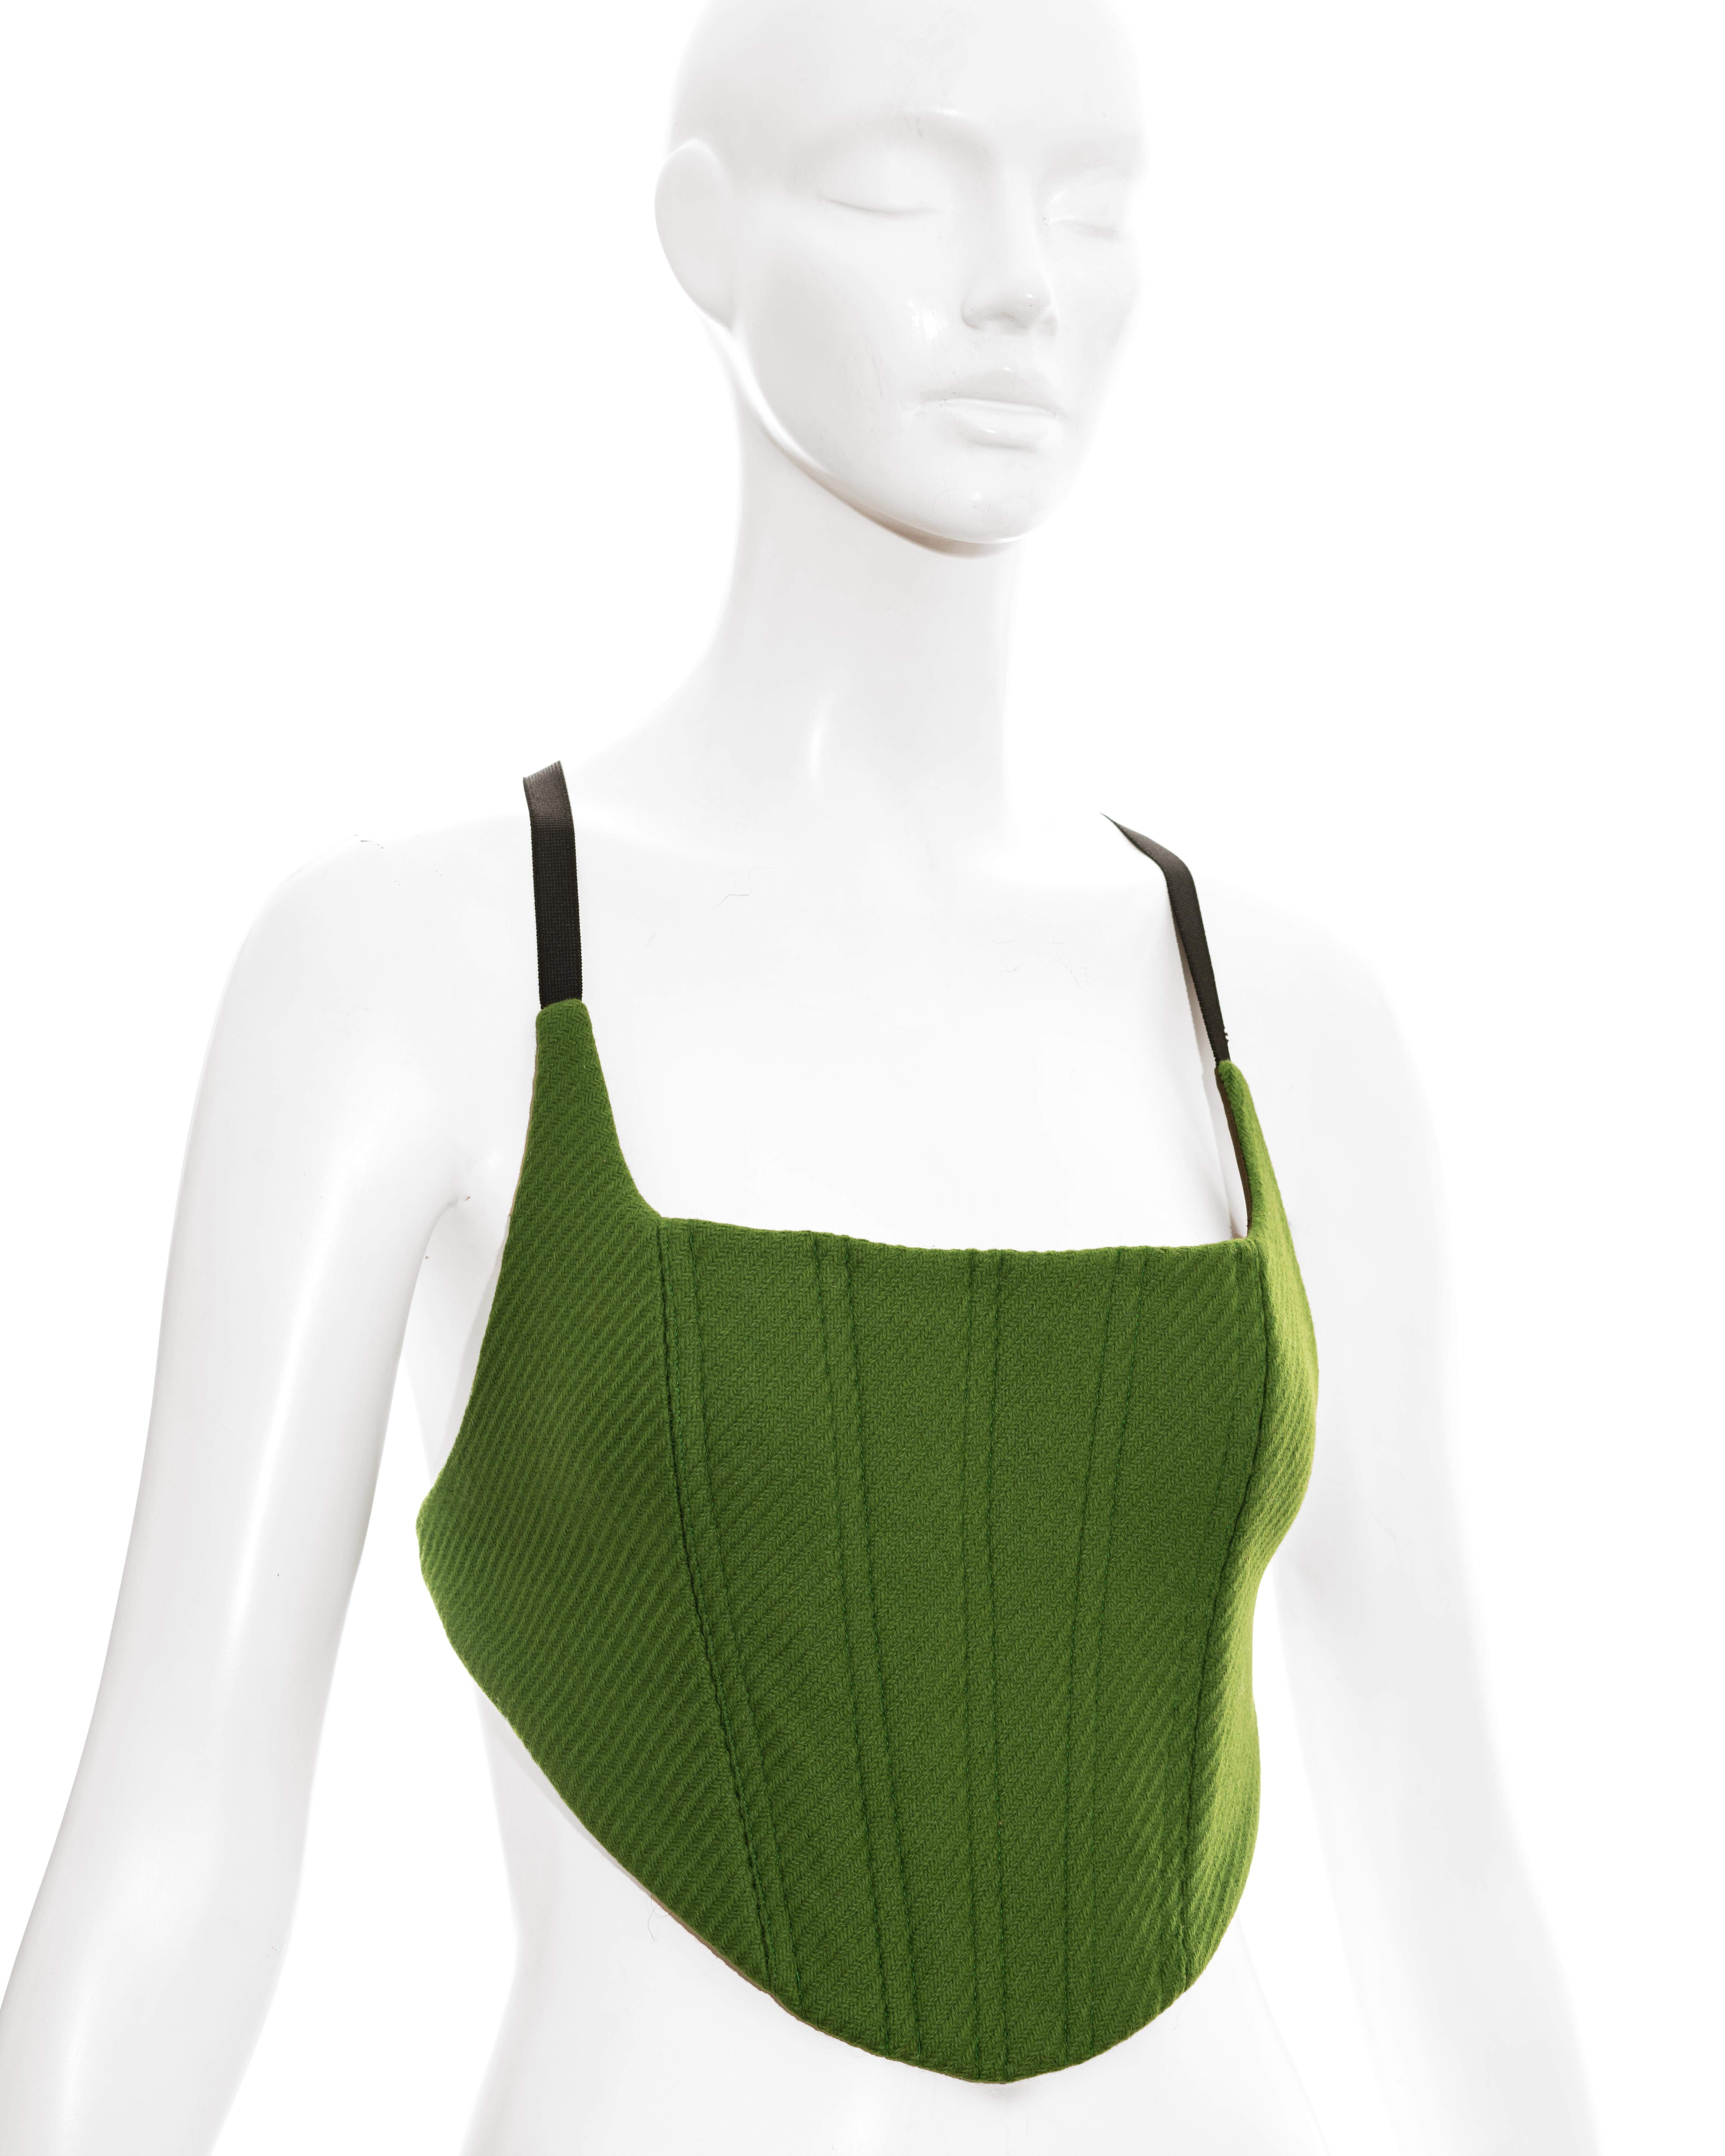 green corset top